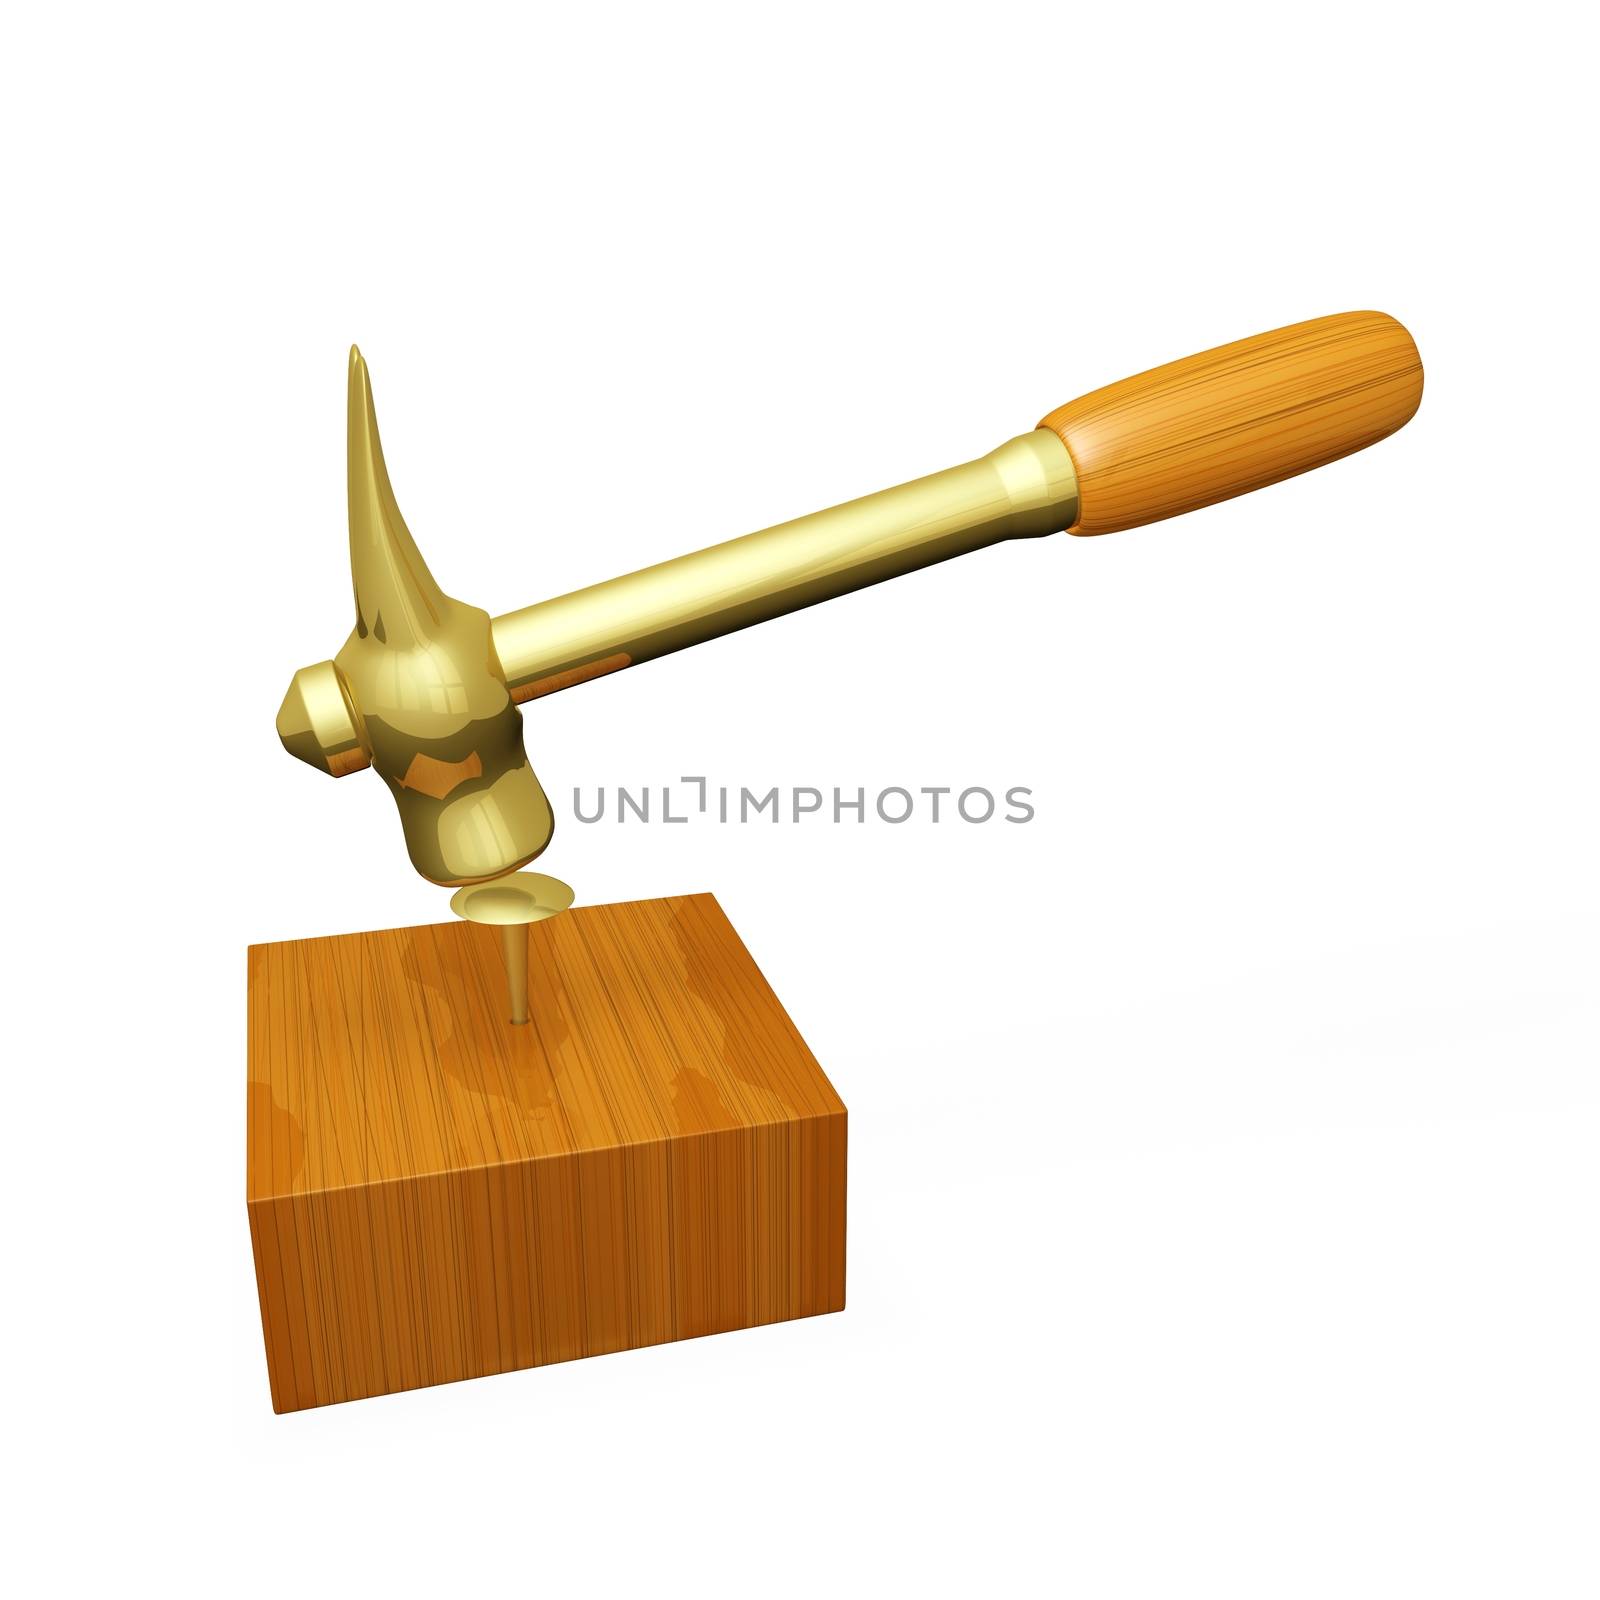 Golden Hammer Driving a Golden Nail into a Wood Block by RichieThakur